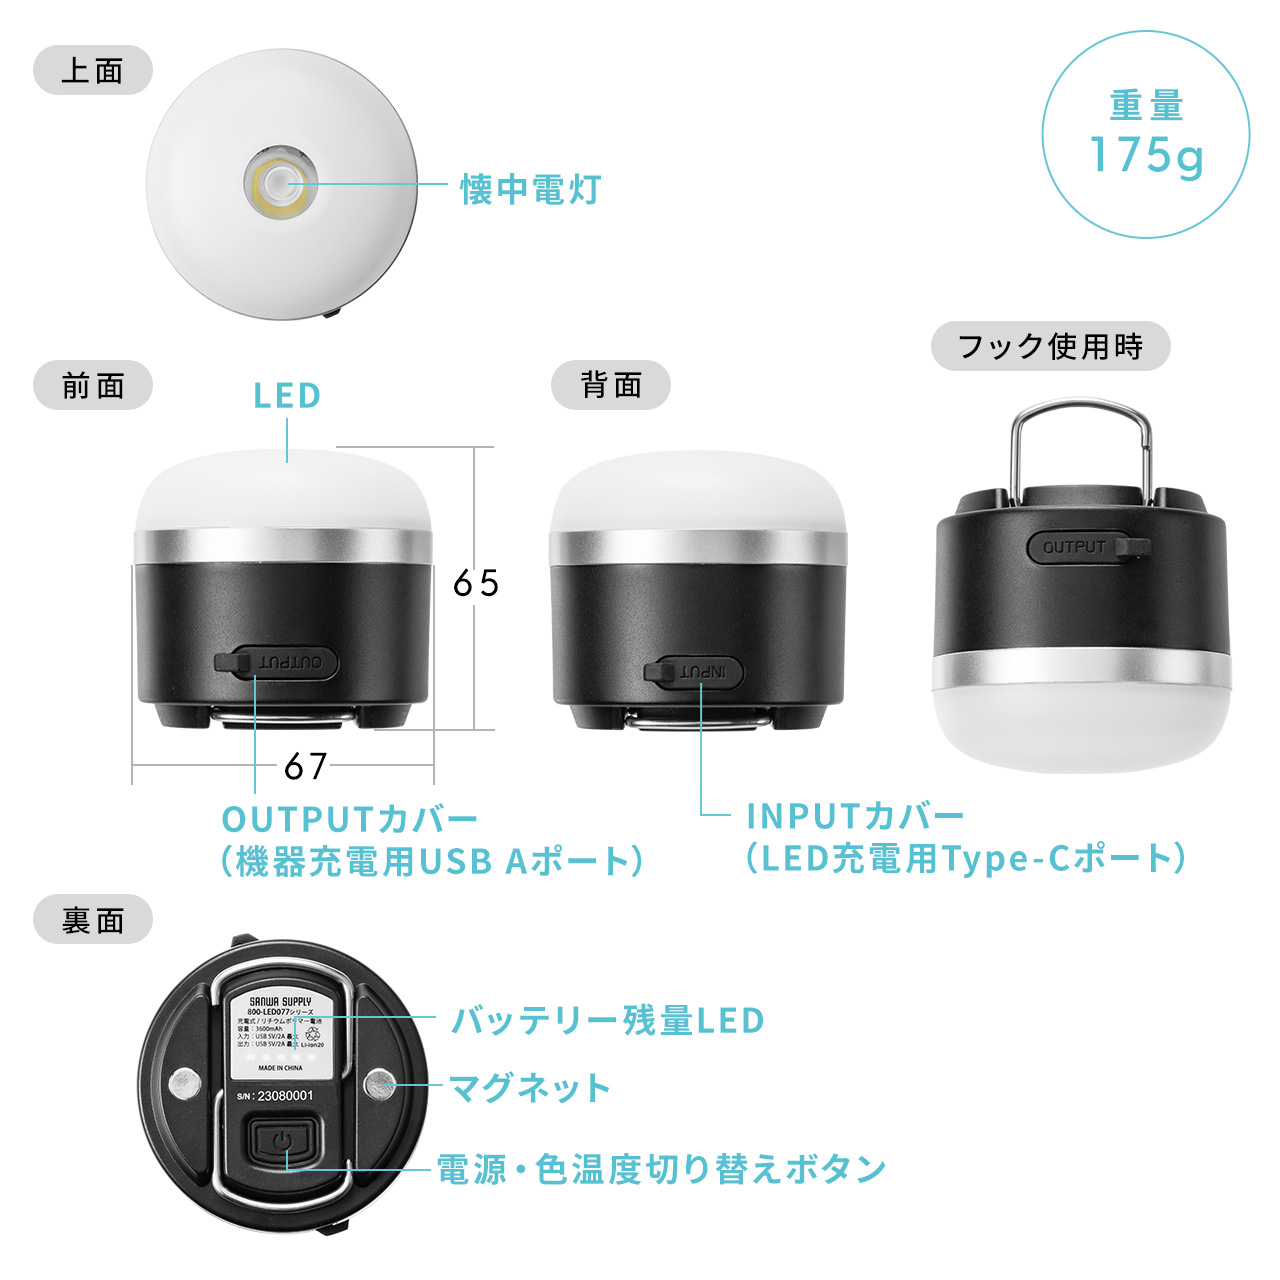 LEDランタン 充電式 コンパクト 最大600ルーメン マグネット フック 対応 USB充電対応 ホワイト 800-LED077W